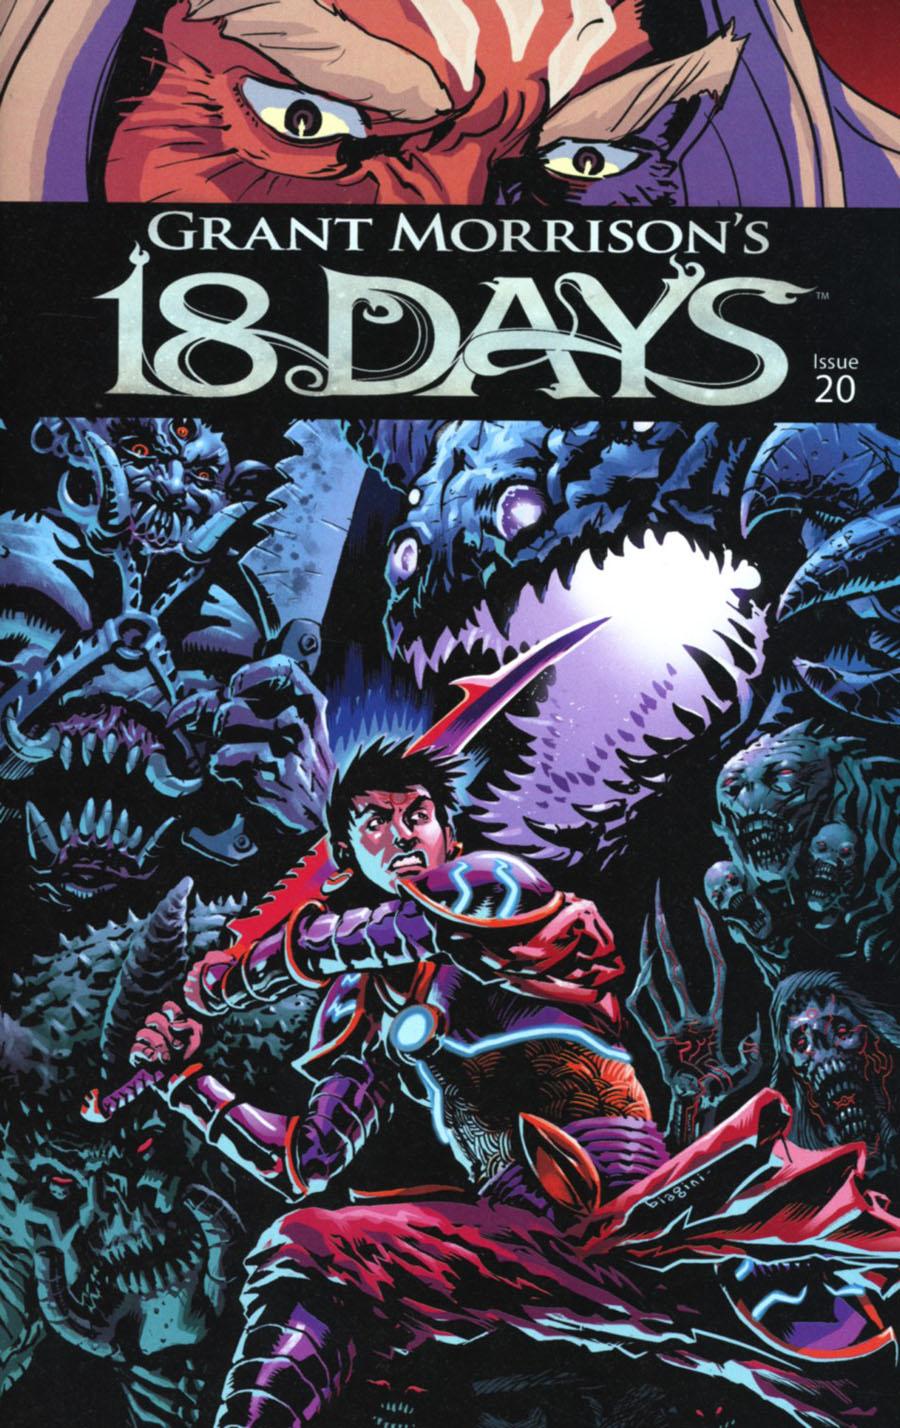 Grant Morrisons 18 Days Vol. 1 #20